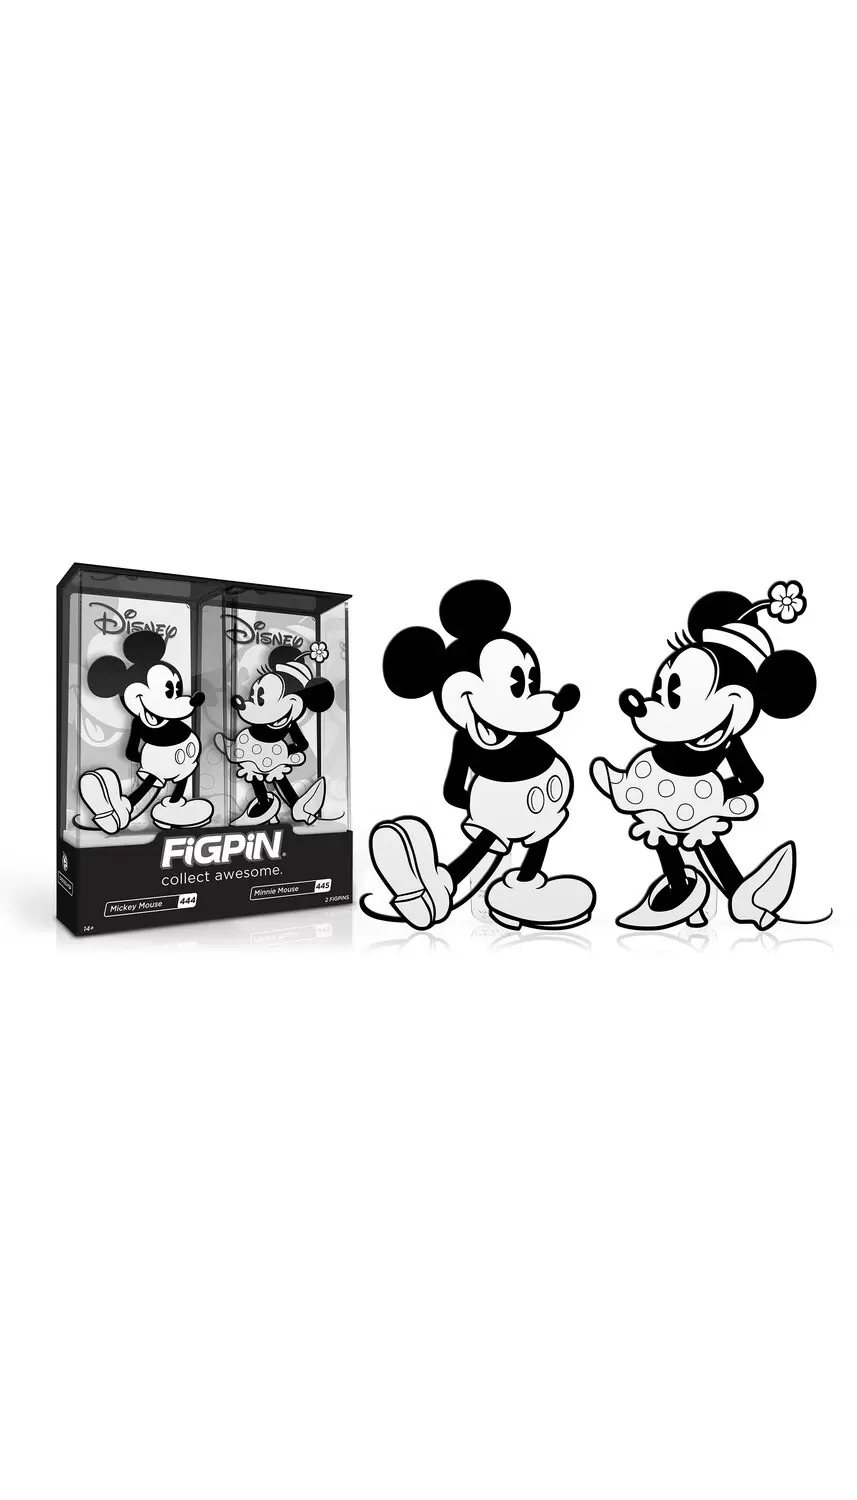 Disney - Figpin - Mickey & Minnie Black & White 2 Pack